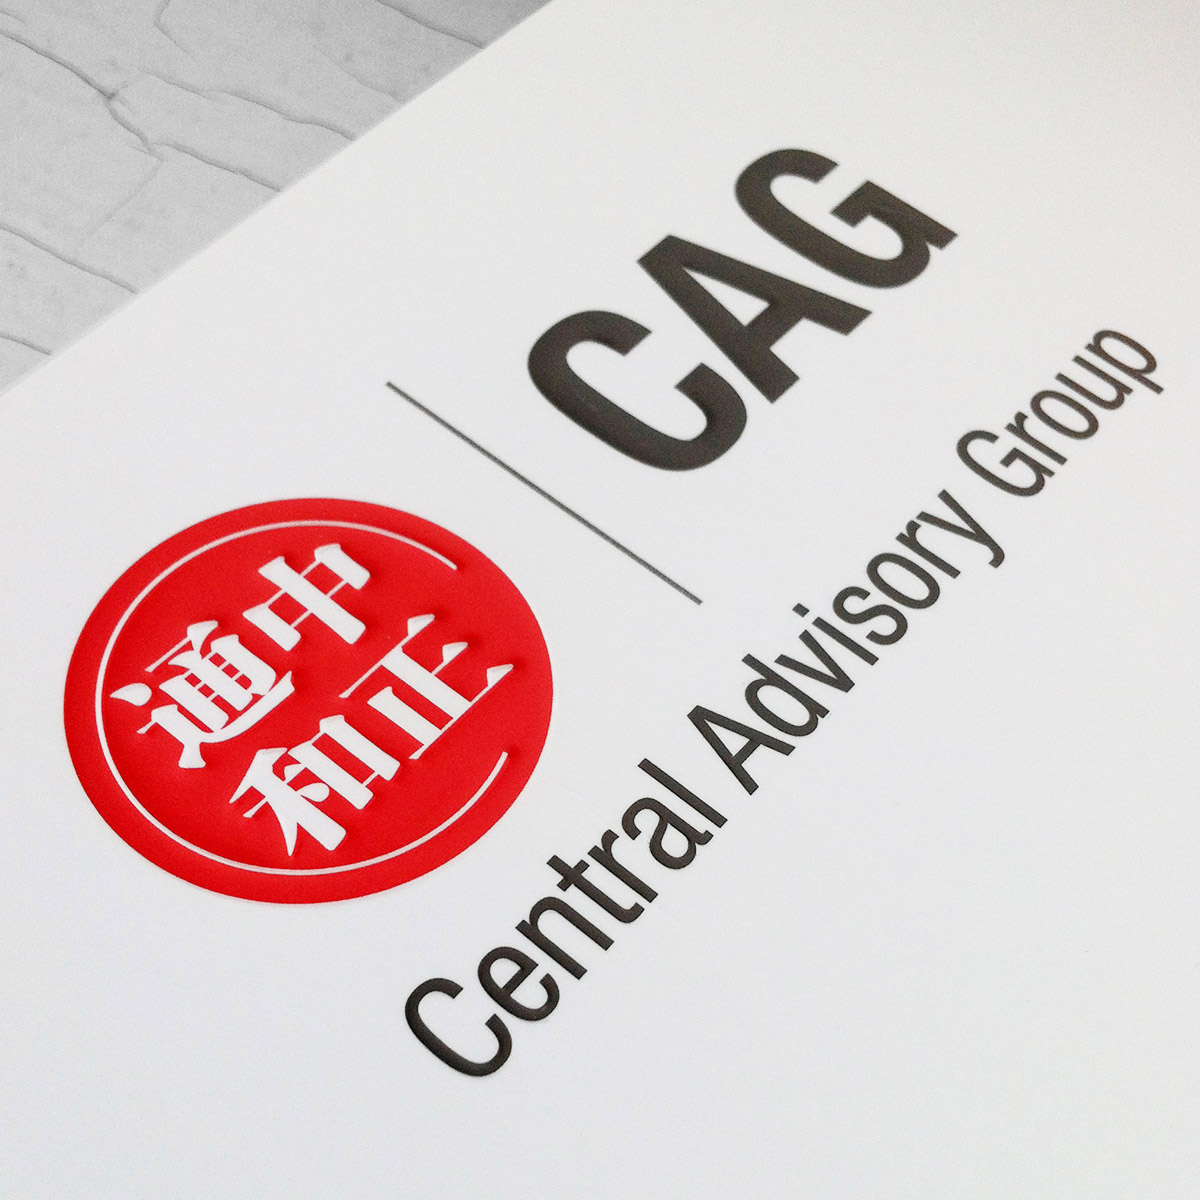 CAG - Central Advisory Group branding by FOX DESIGN, Sydney